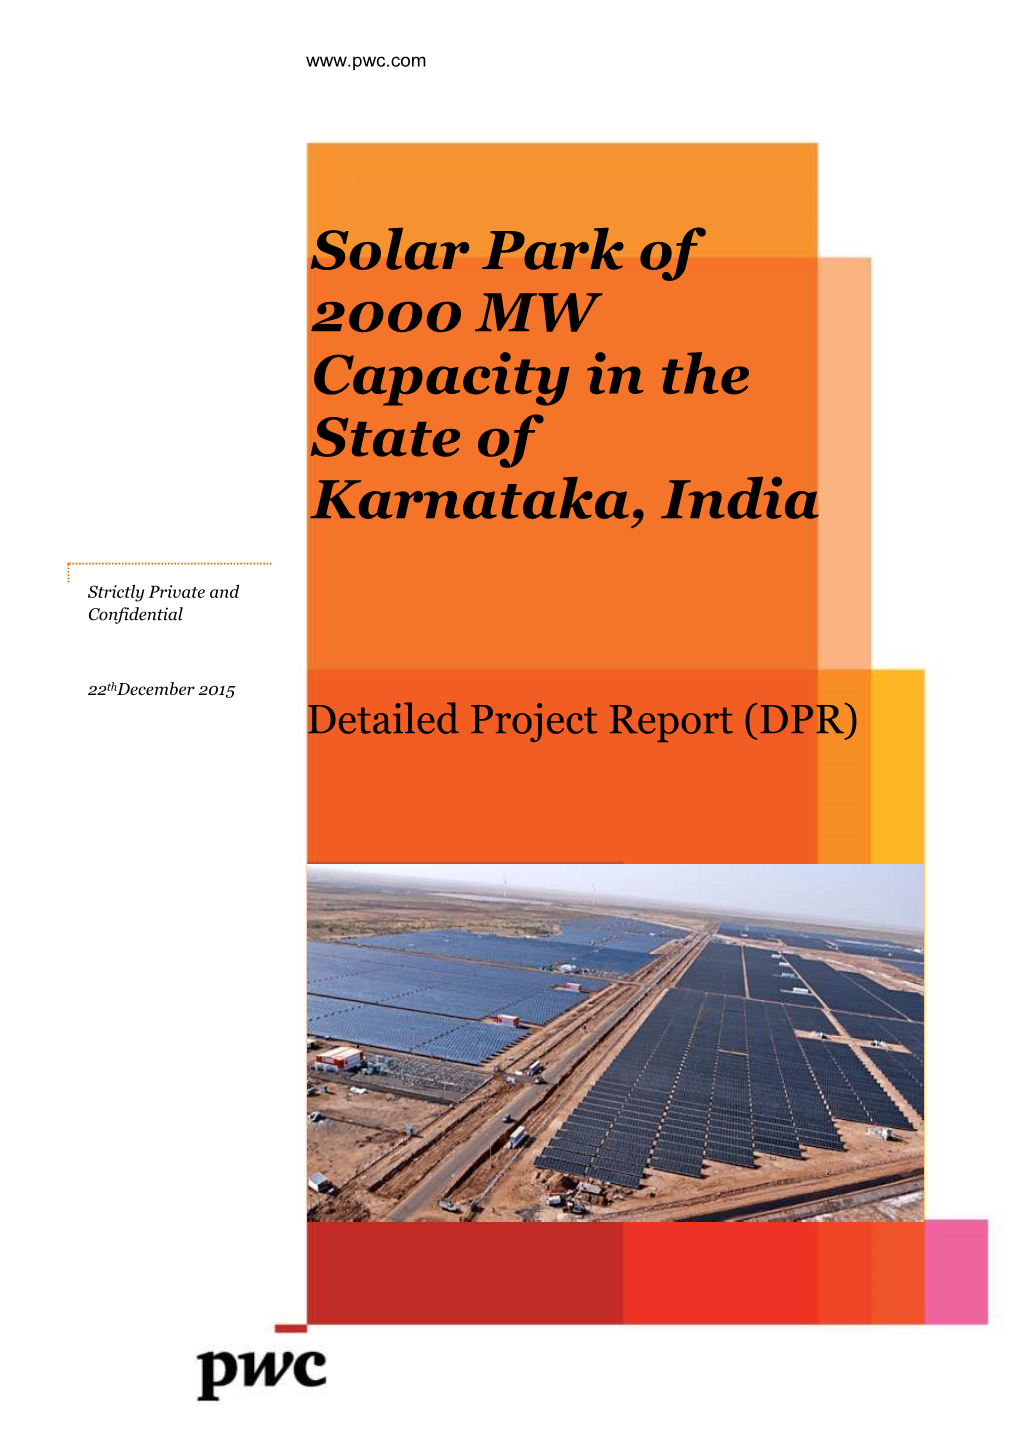 Solar Park of 2000 MW Capacity in the State of Karnataka, India